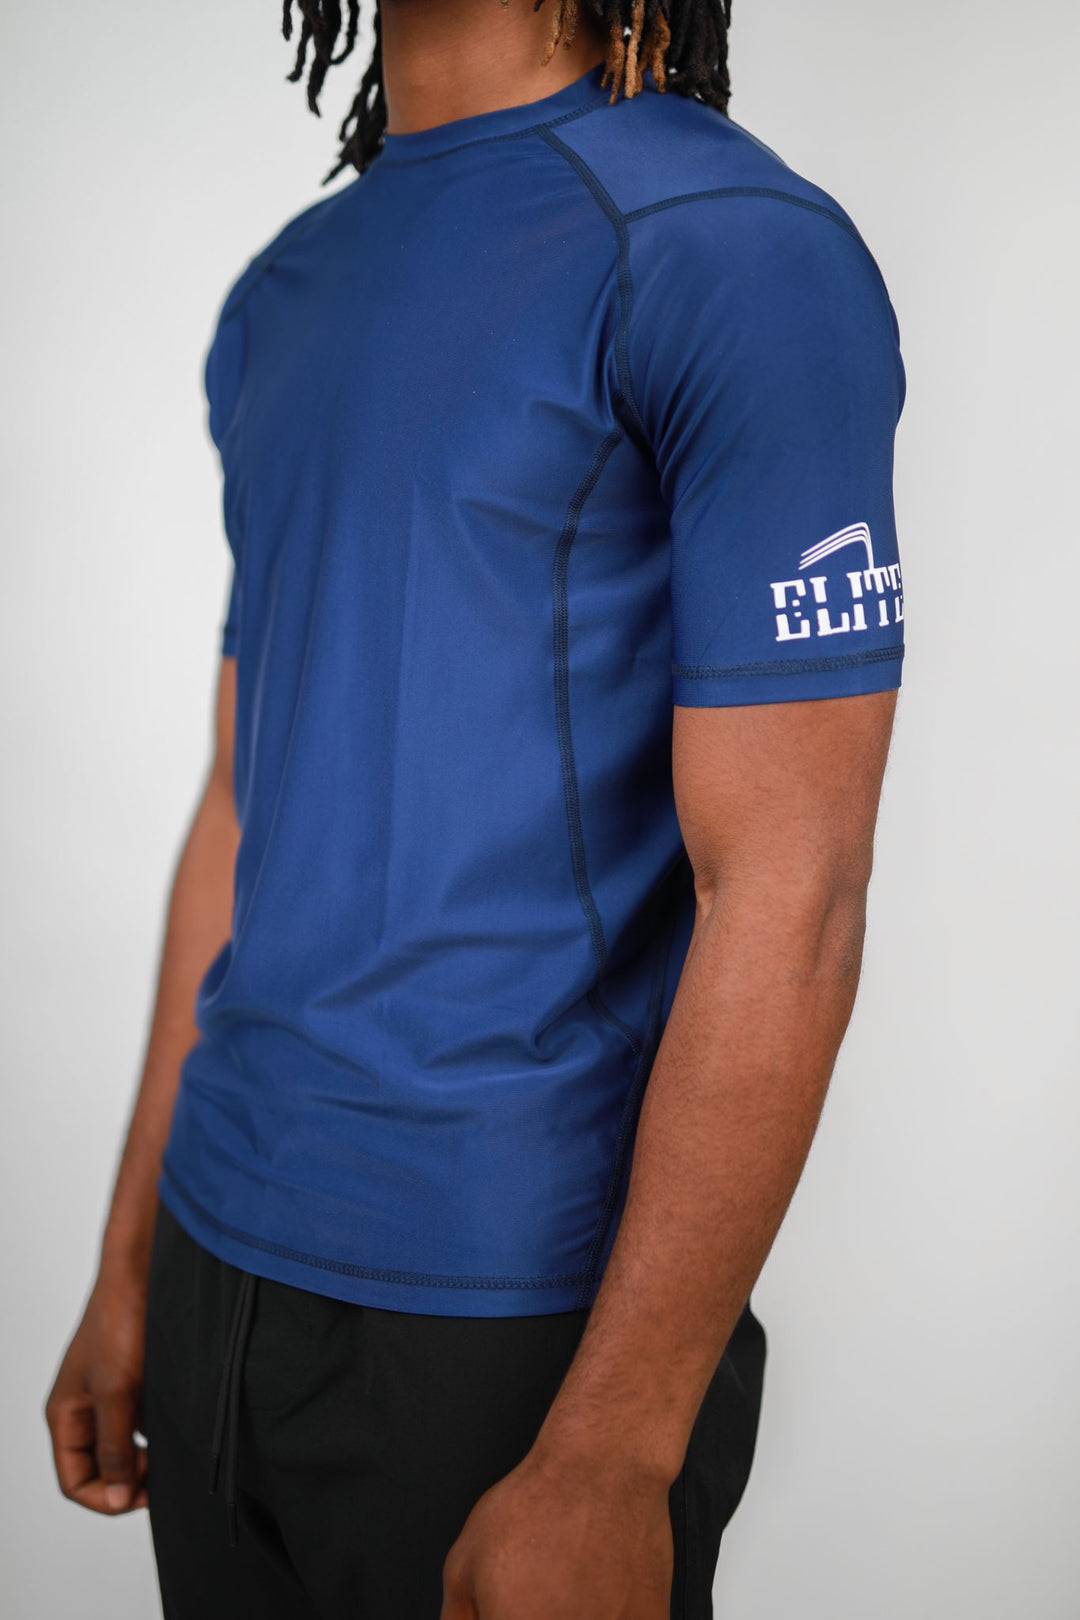 Elite - Compression Shirt Blue